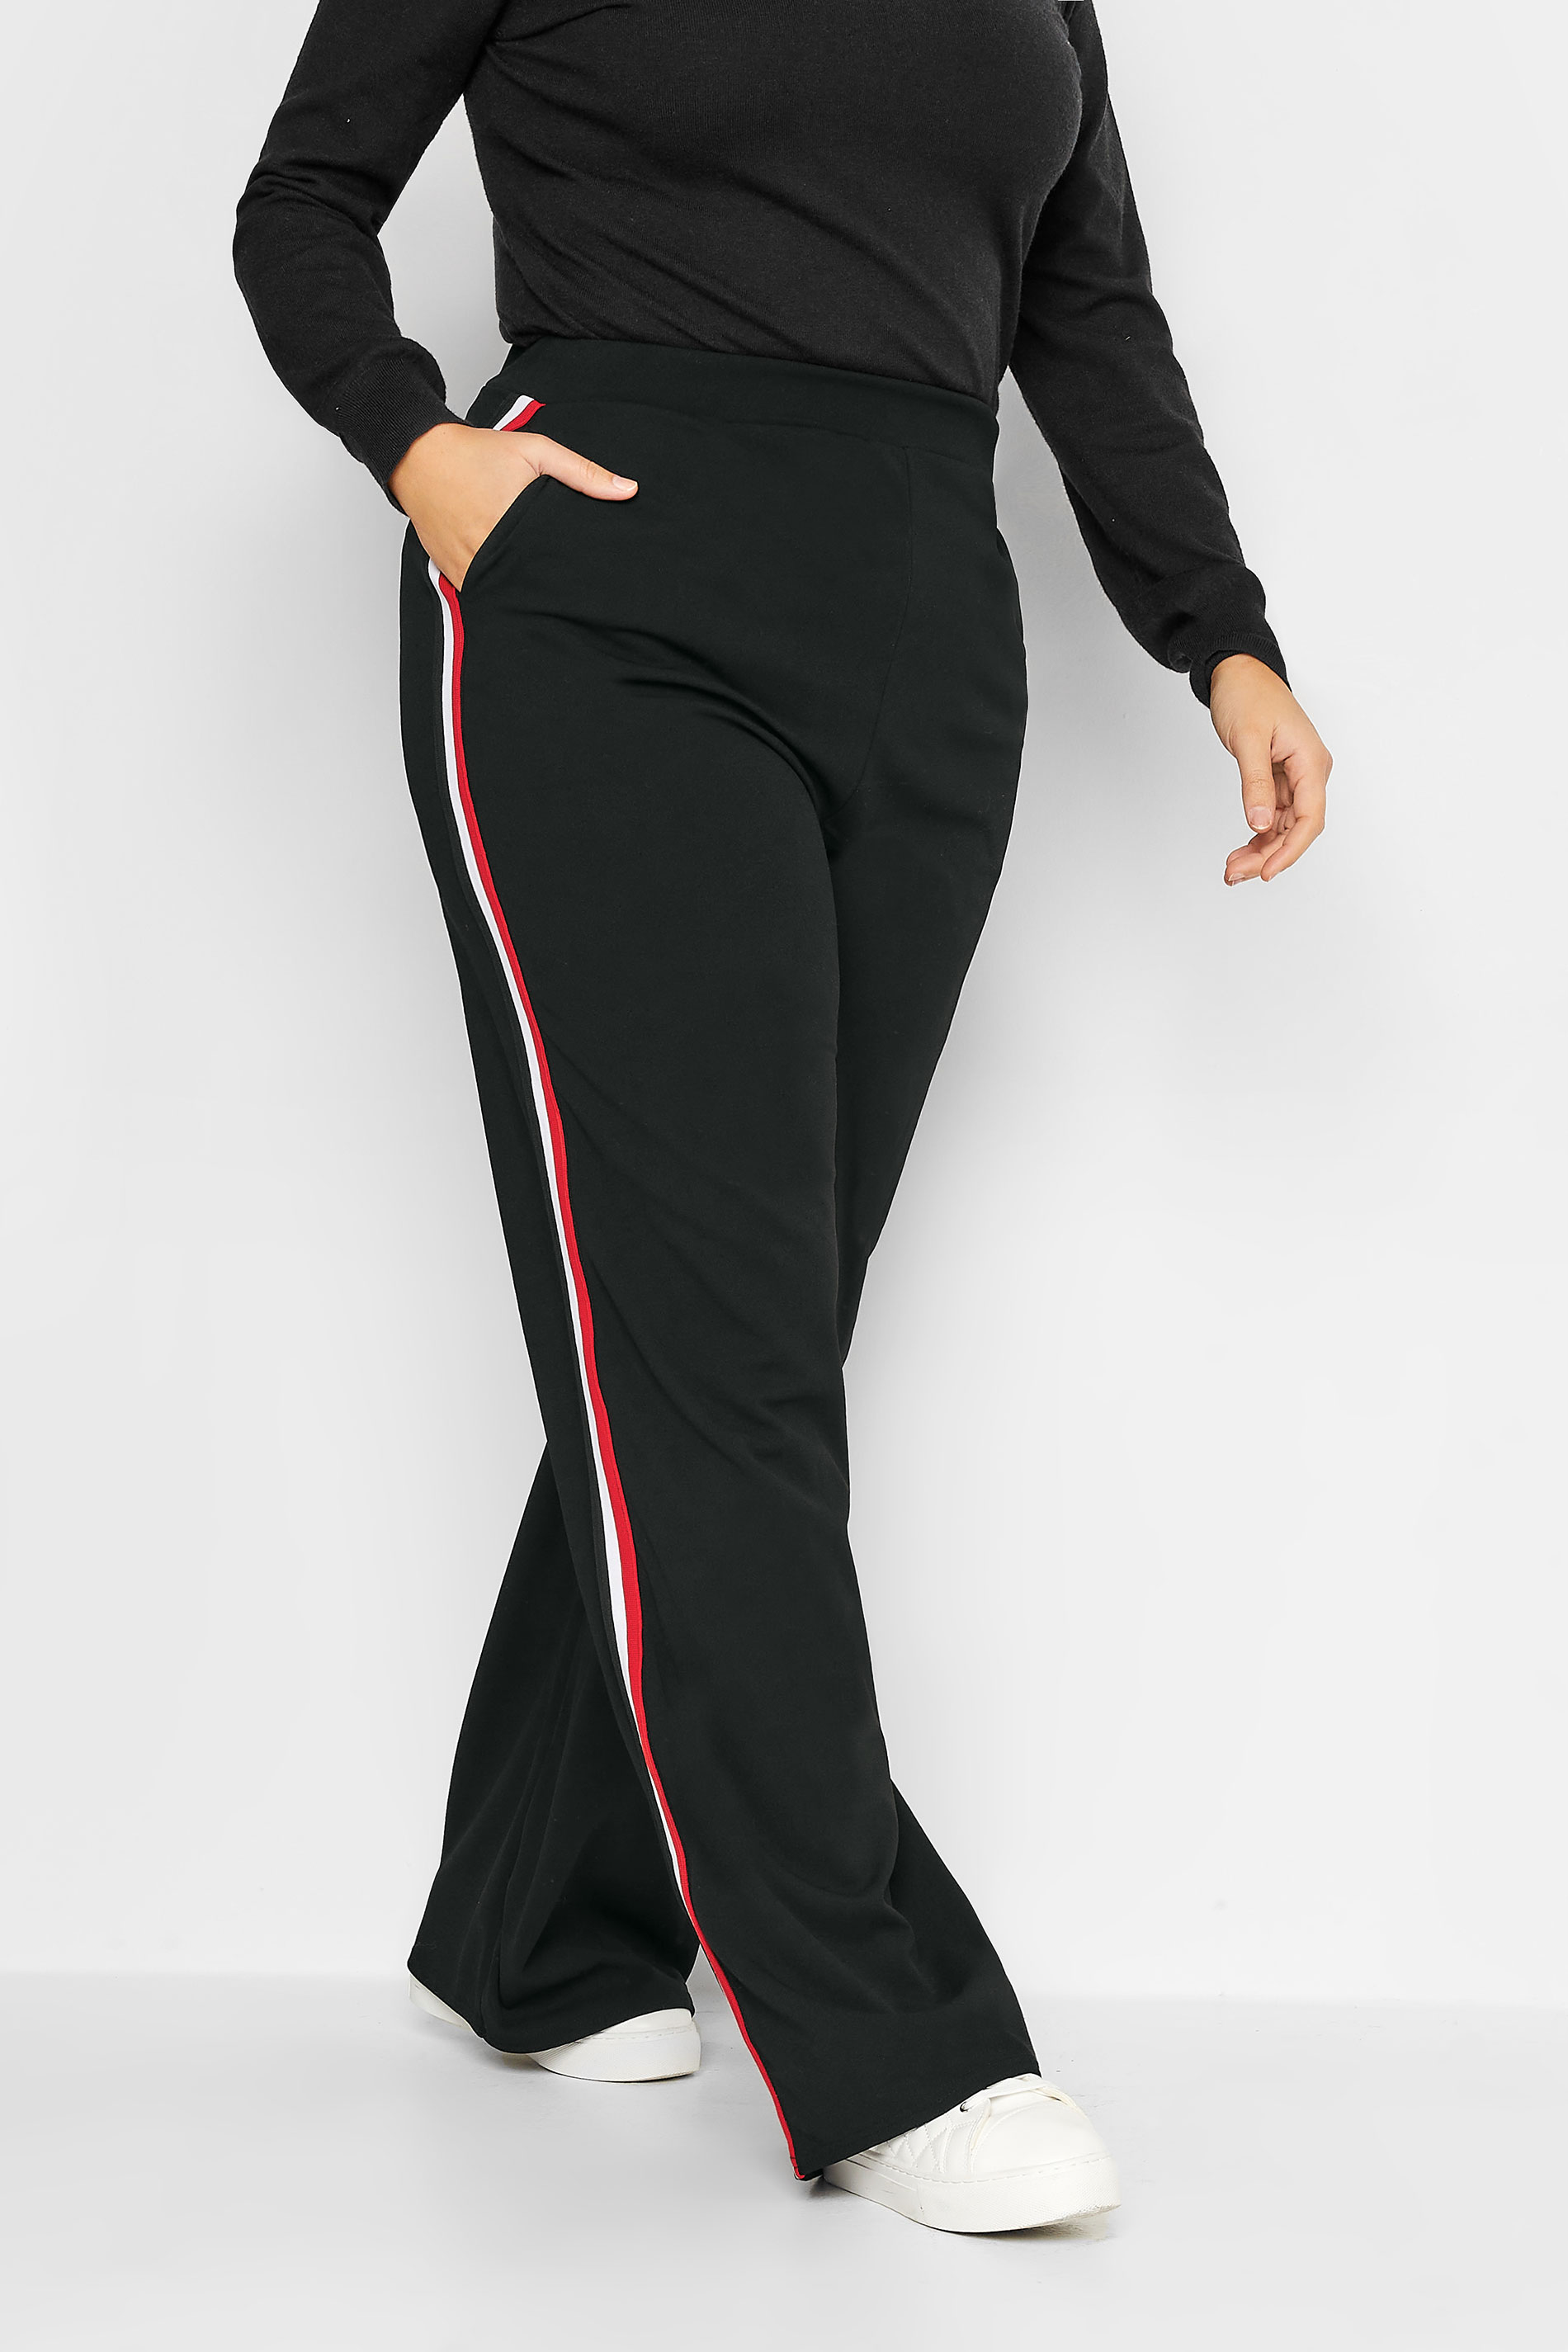 LTS Tall Women's Black & Red Side Stripe Wide Leg Trousers | Long Tall Sally 1